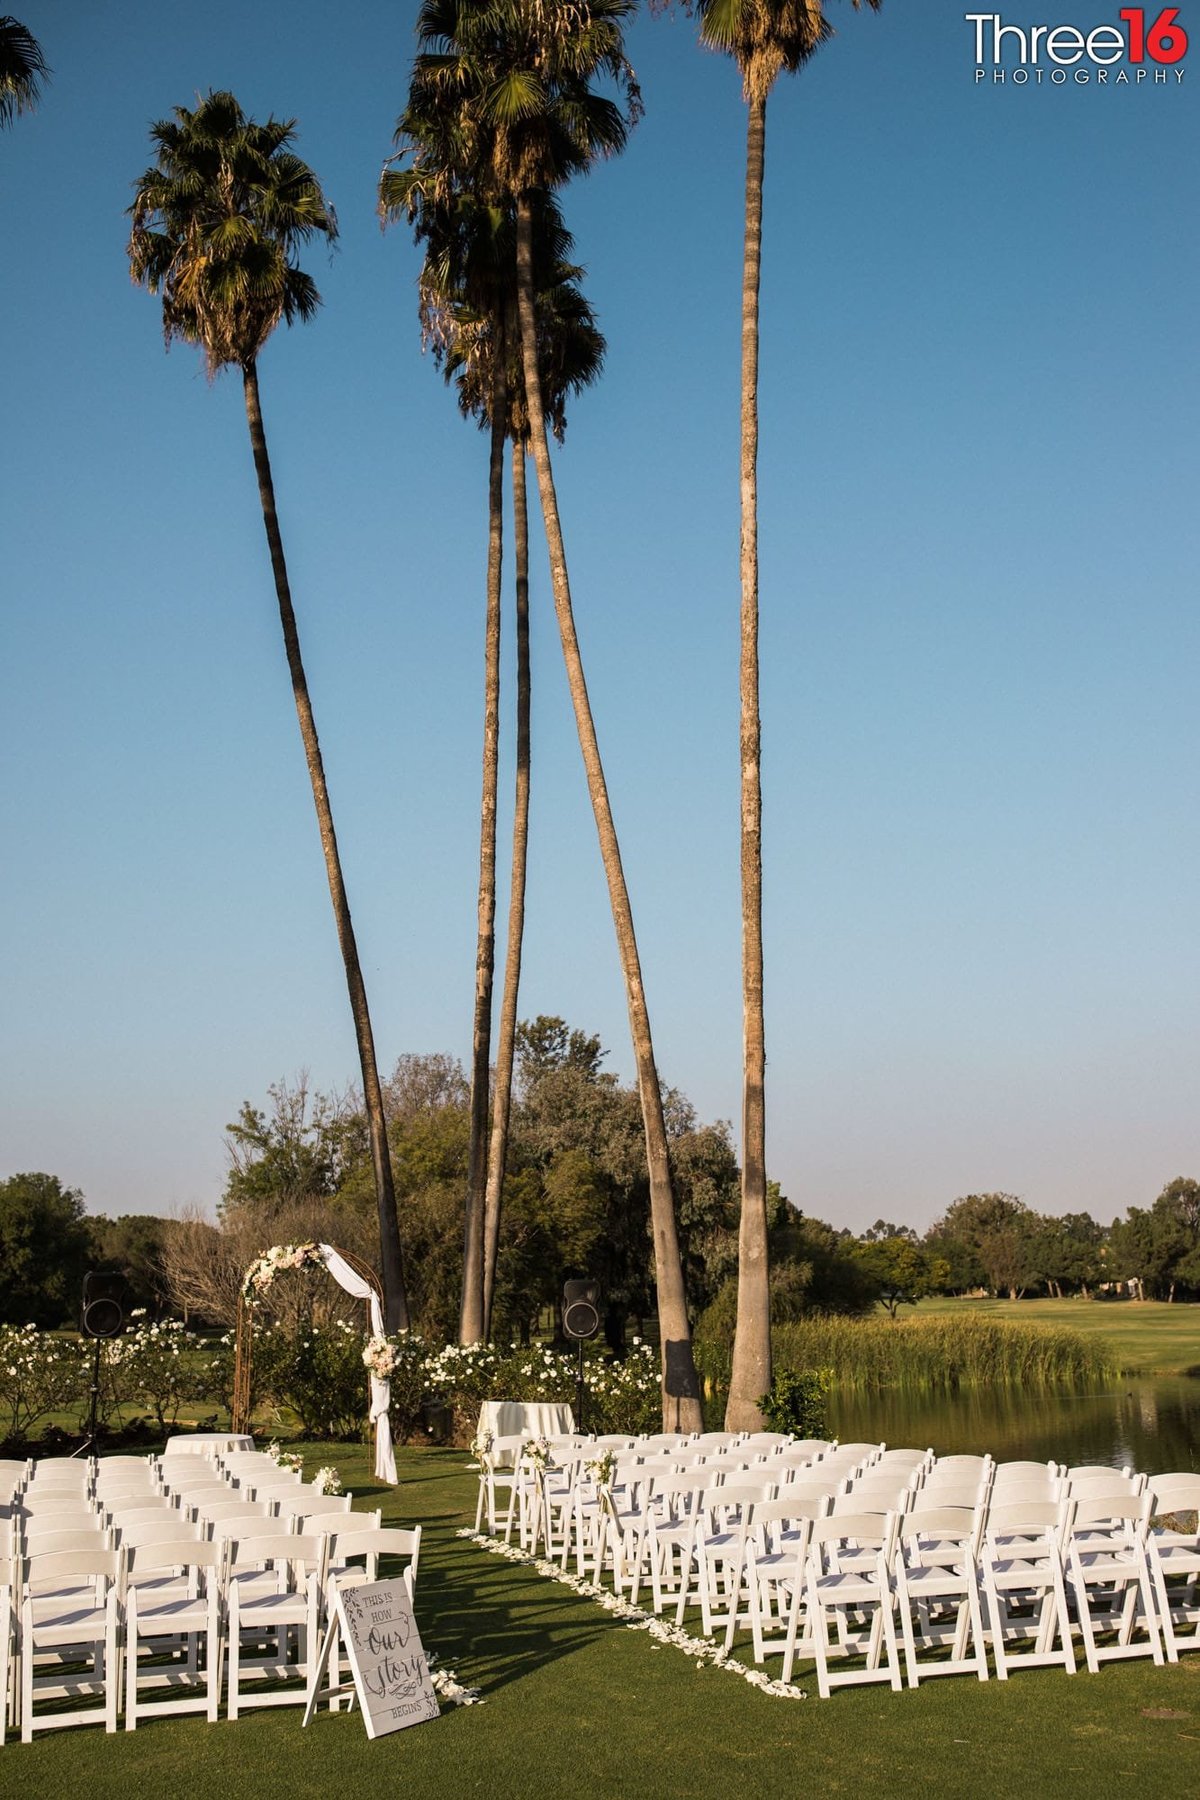 Giant palm trees overlook outdoor wedding ceremony setup